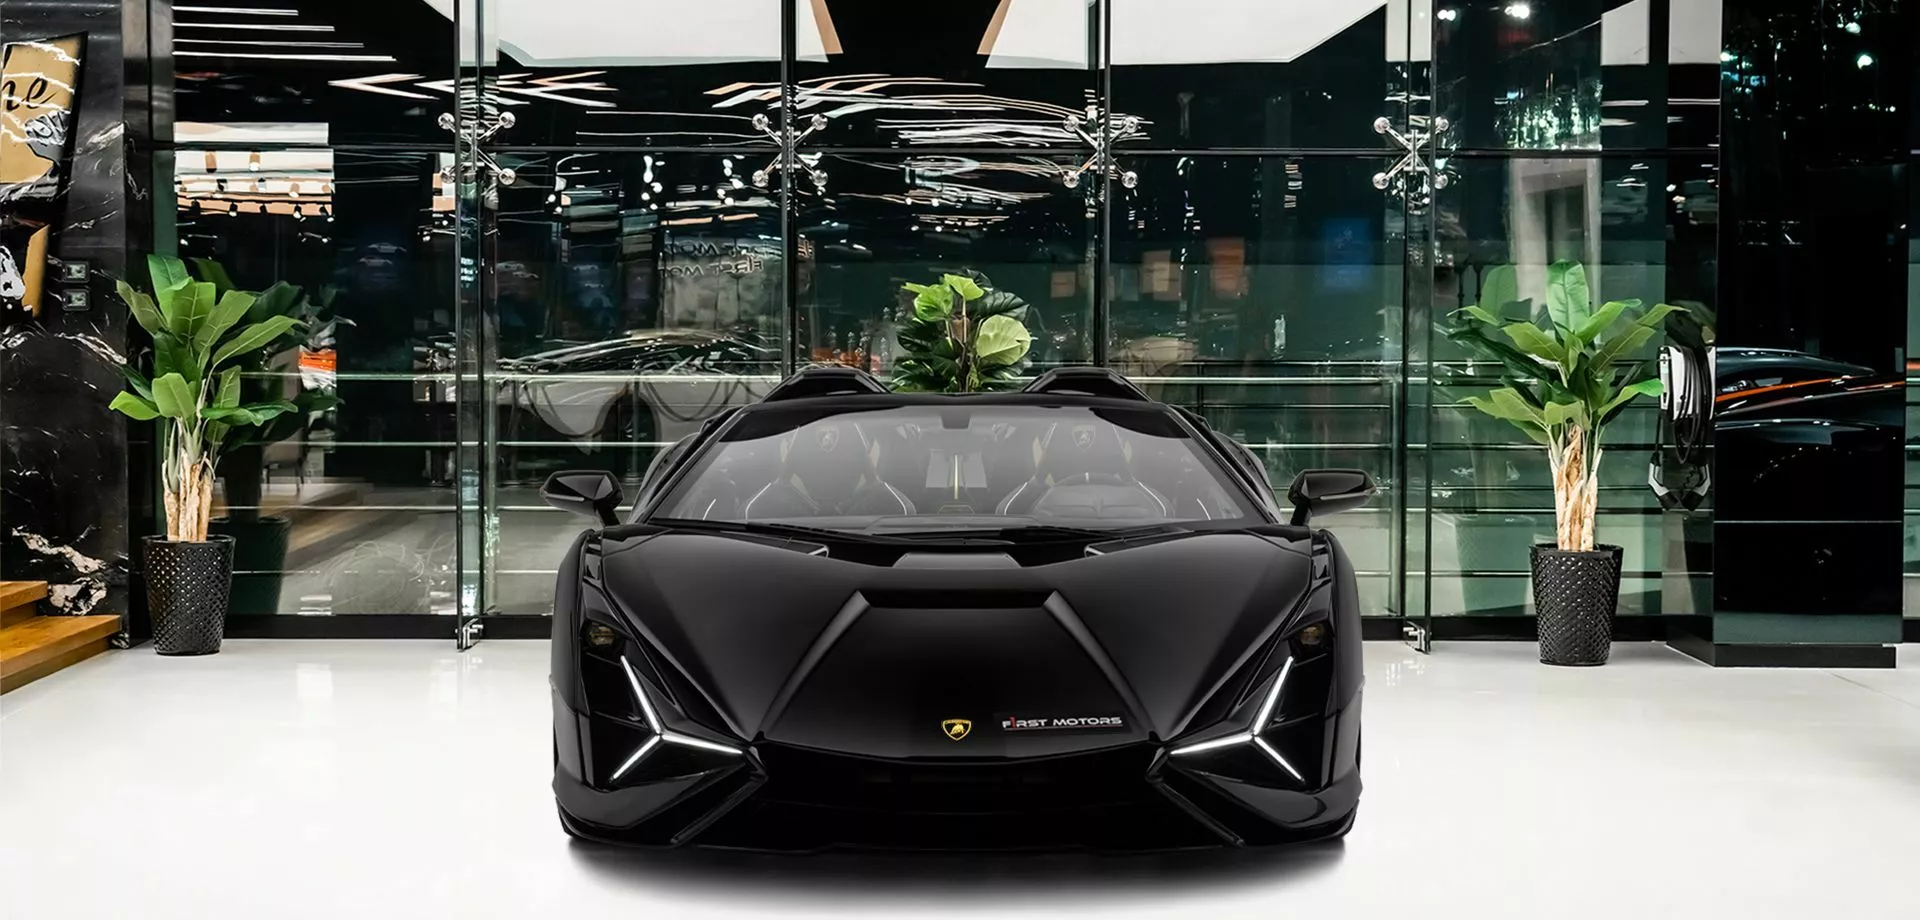 Редчайший супергибрид Lamborghini Sian FKP 37 Roadster появился в продаже в Дубае2